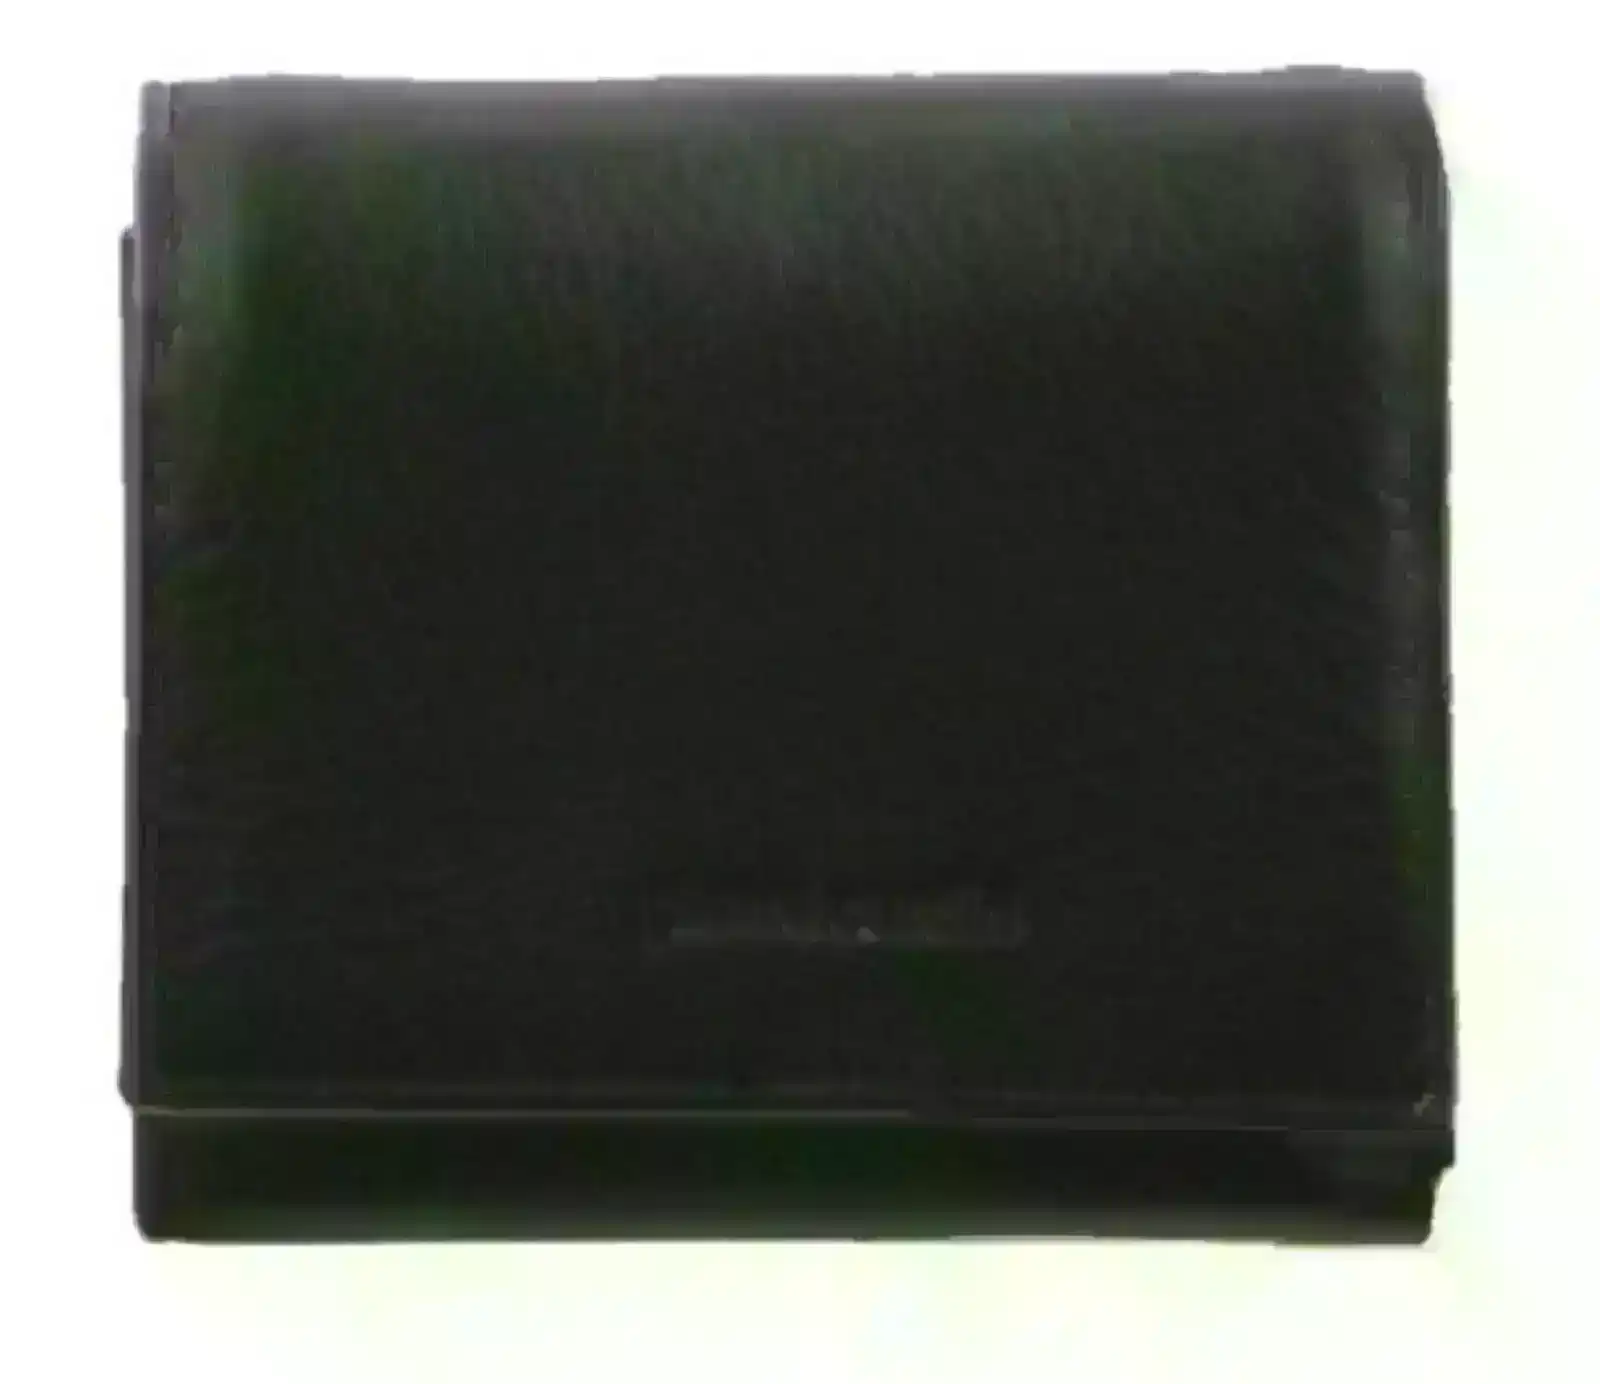 Pierre Cardin RFID Mens Wallet Tri-Fold Genuine Italian Leather - Black